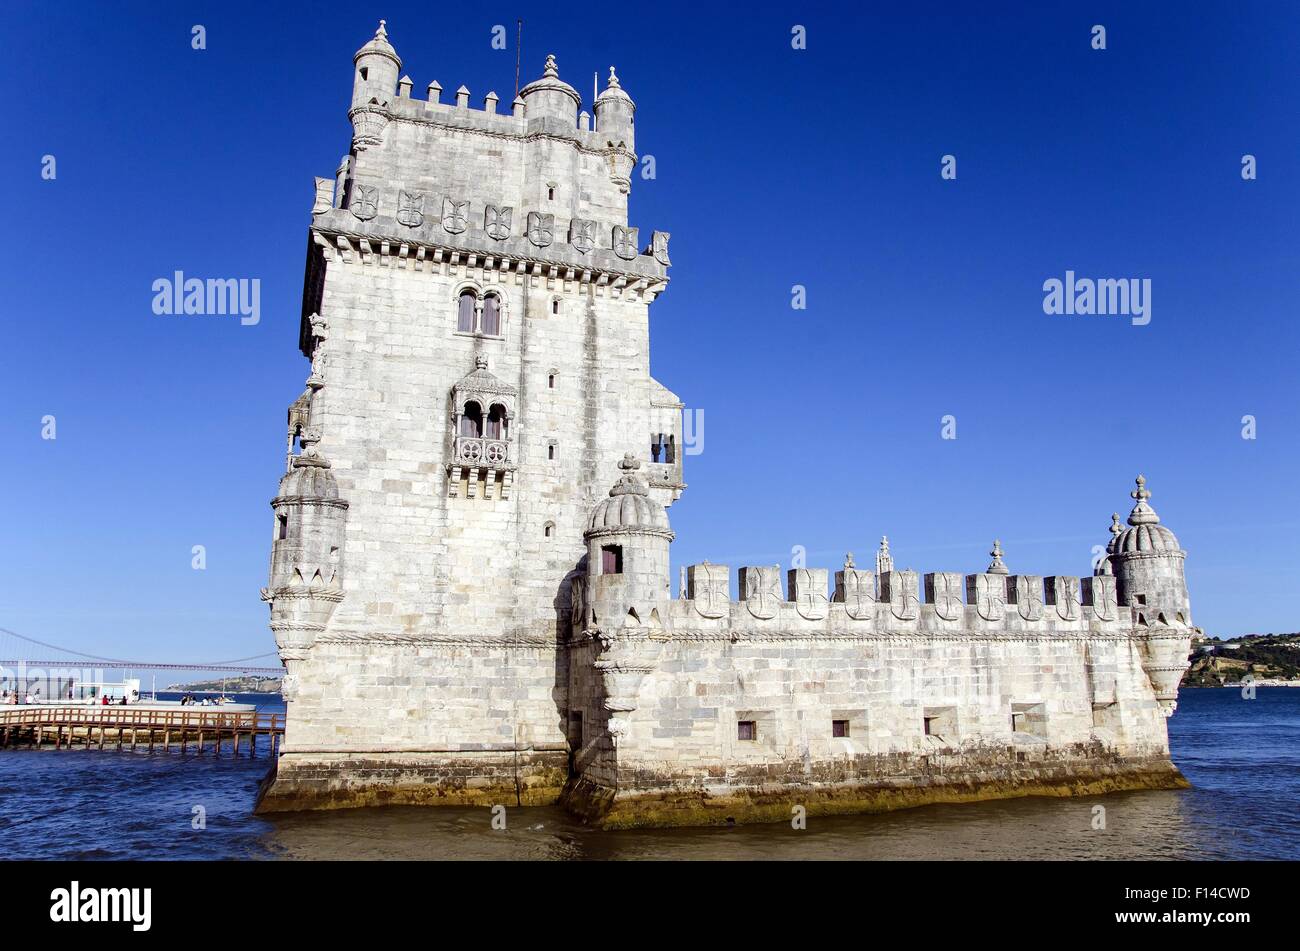 Torre de Belem tower, Lisbon, Portugal Stock Photo